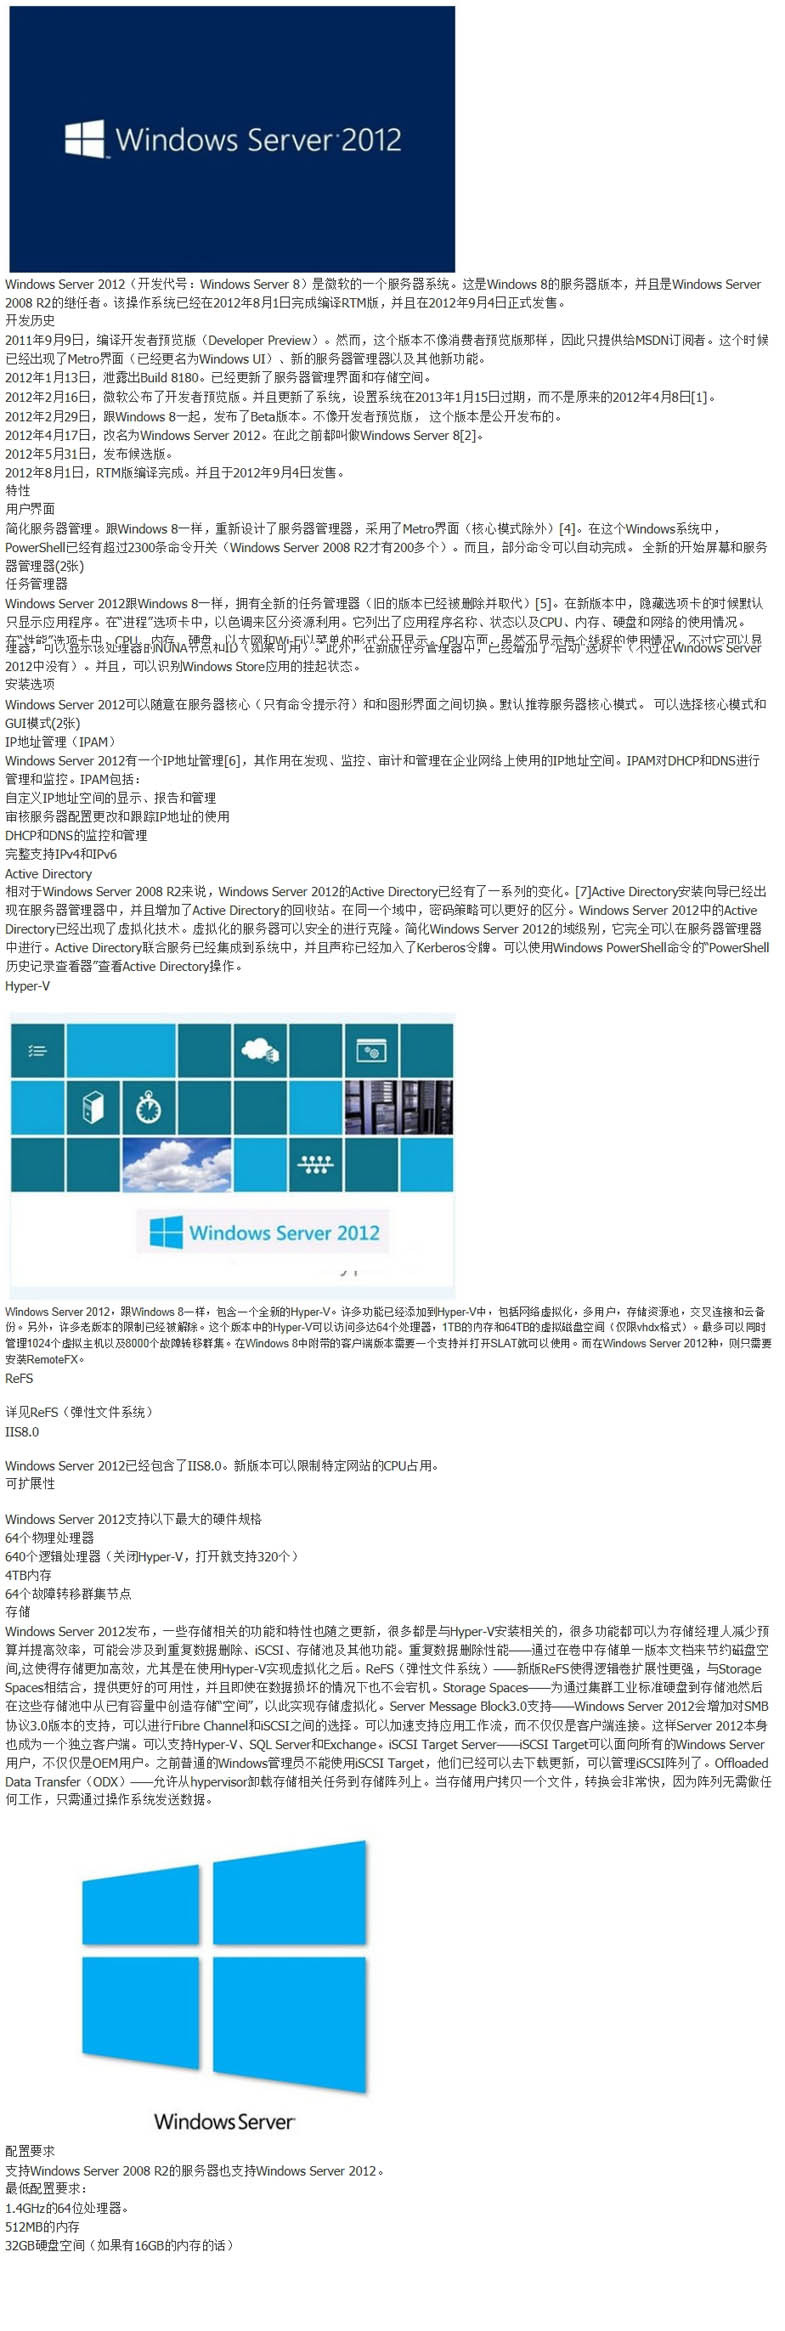 hp(惠普) windows server 2012 R2 64位简体中文